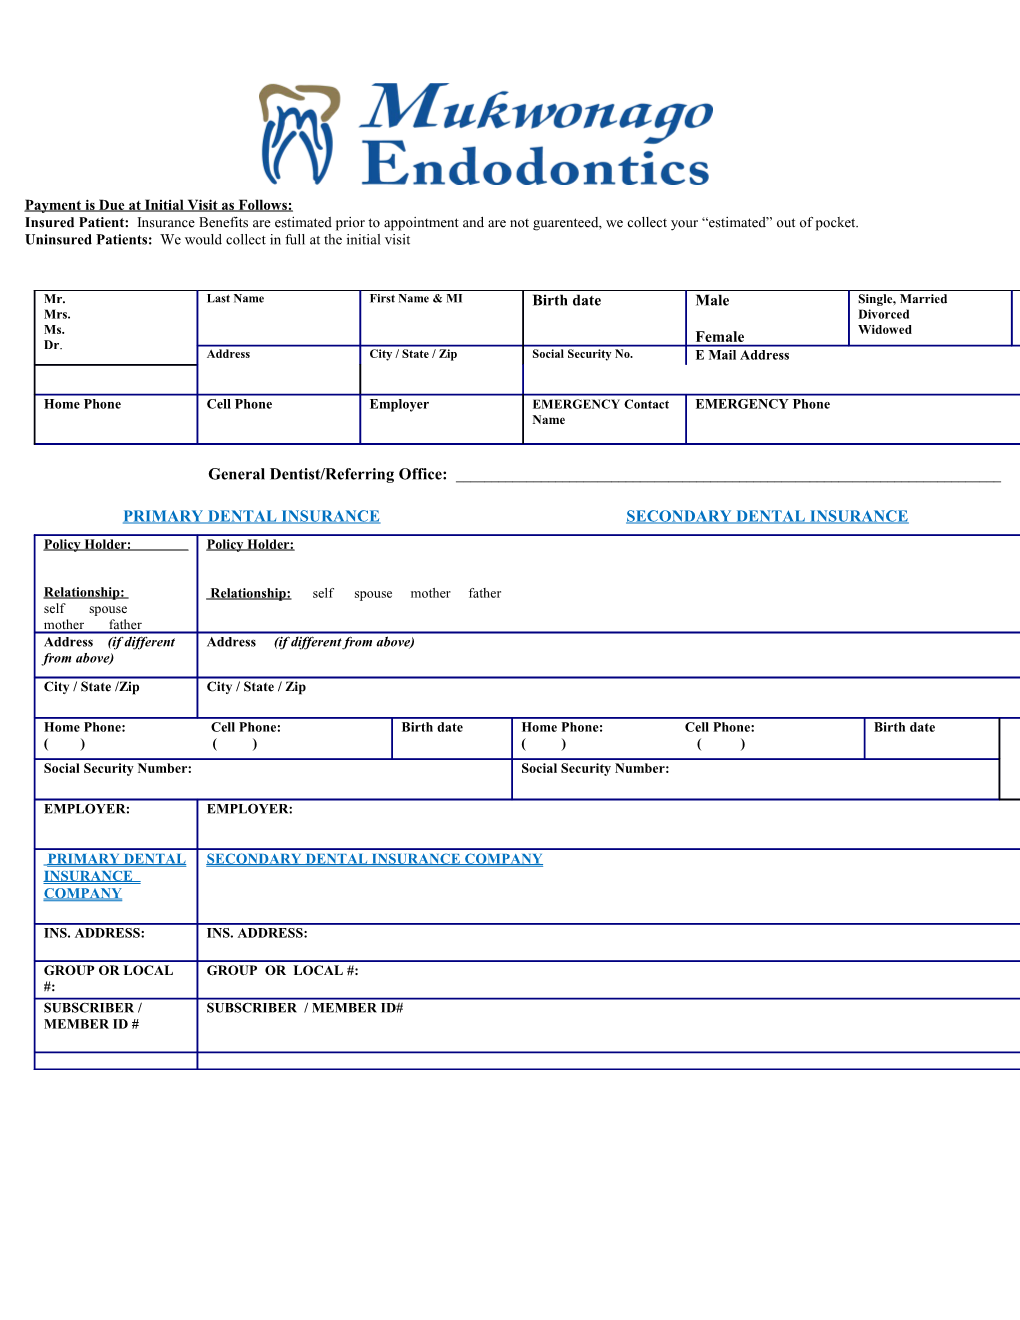 Welcome to Access Endodontics